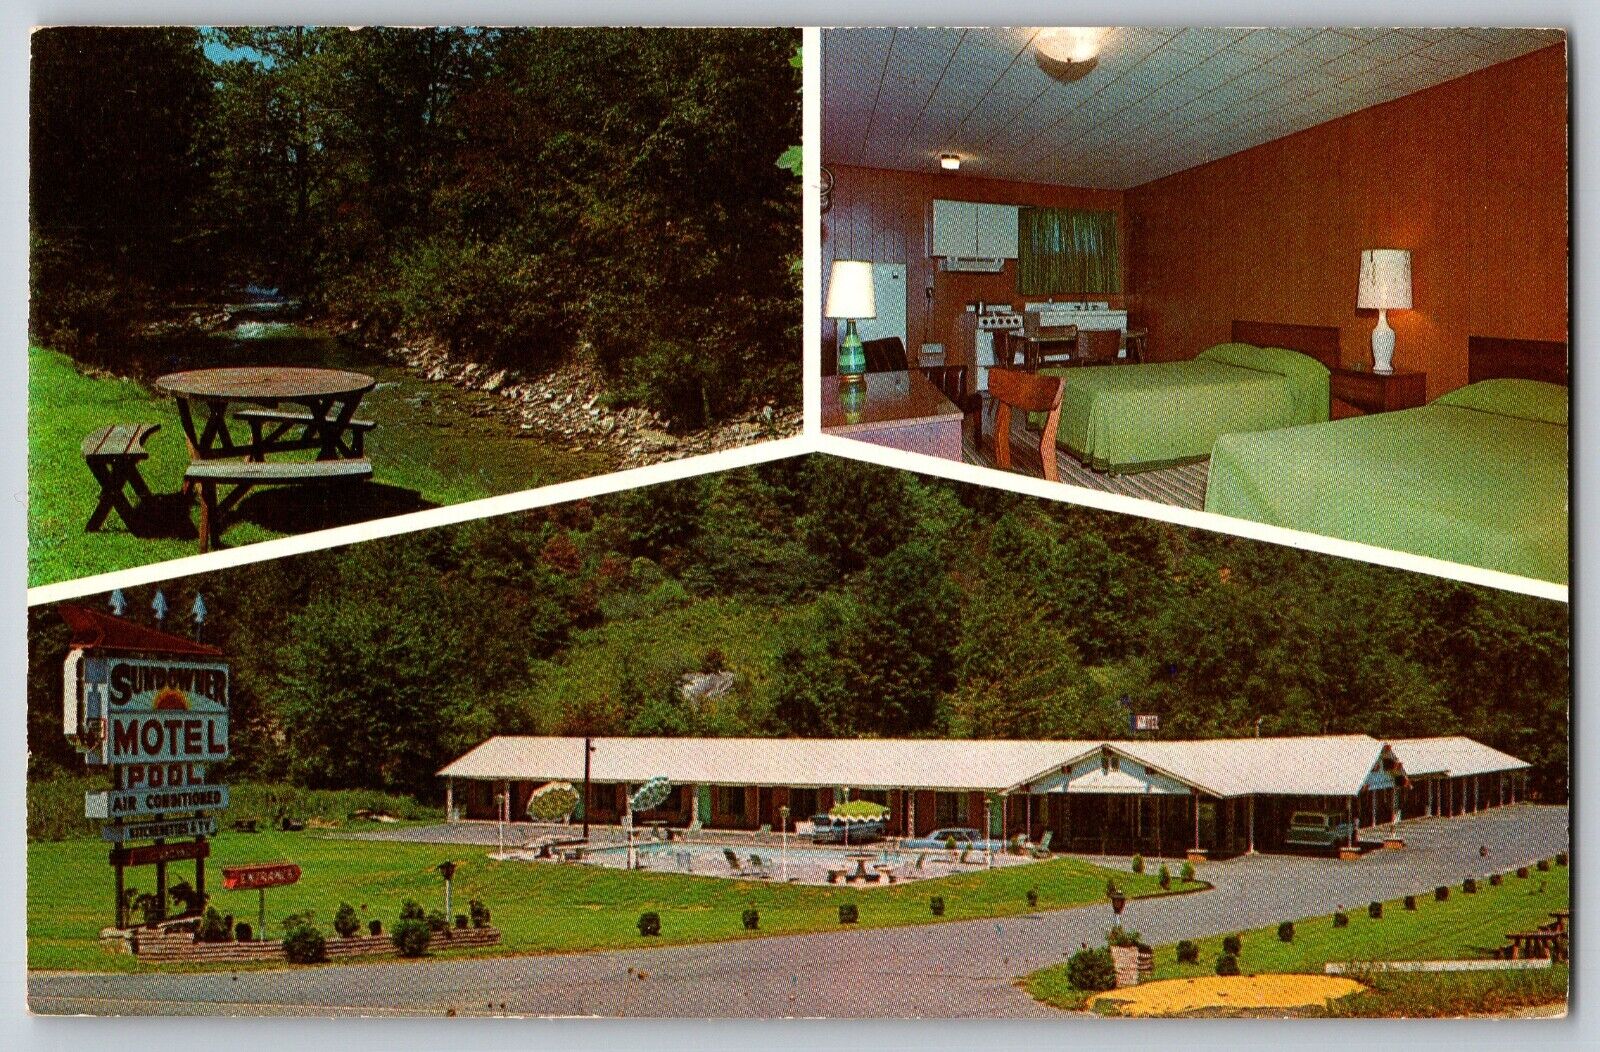 Waynesville, North Carolina - Sundowner Motel, Maggie Valley - Vintage Postcard